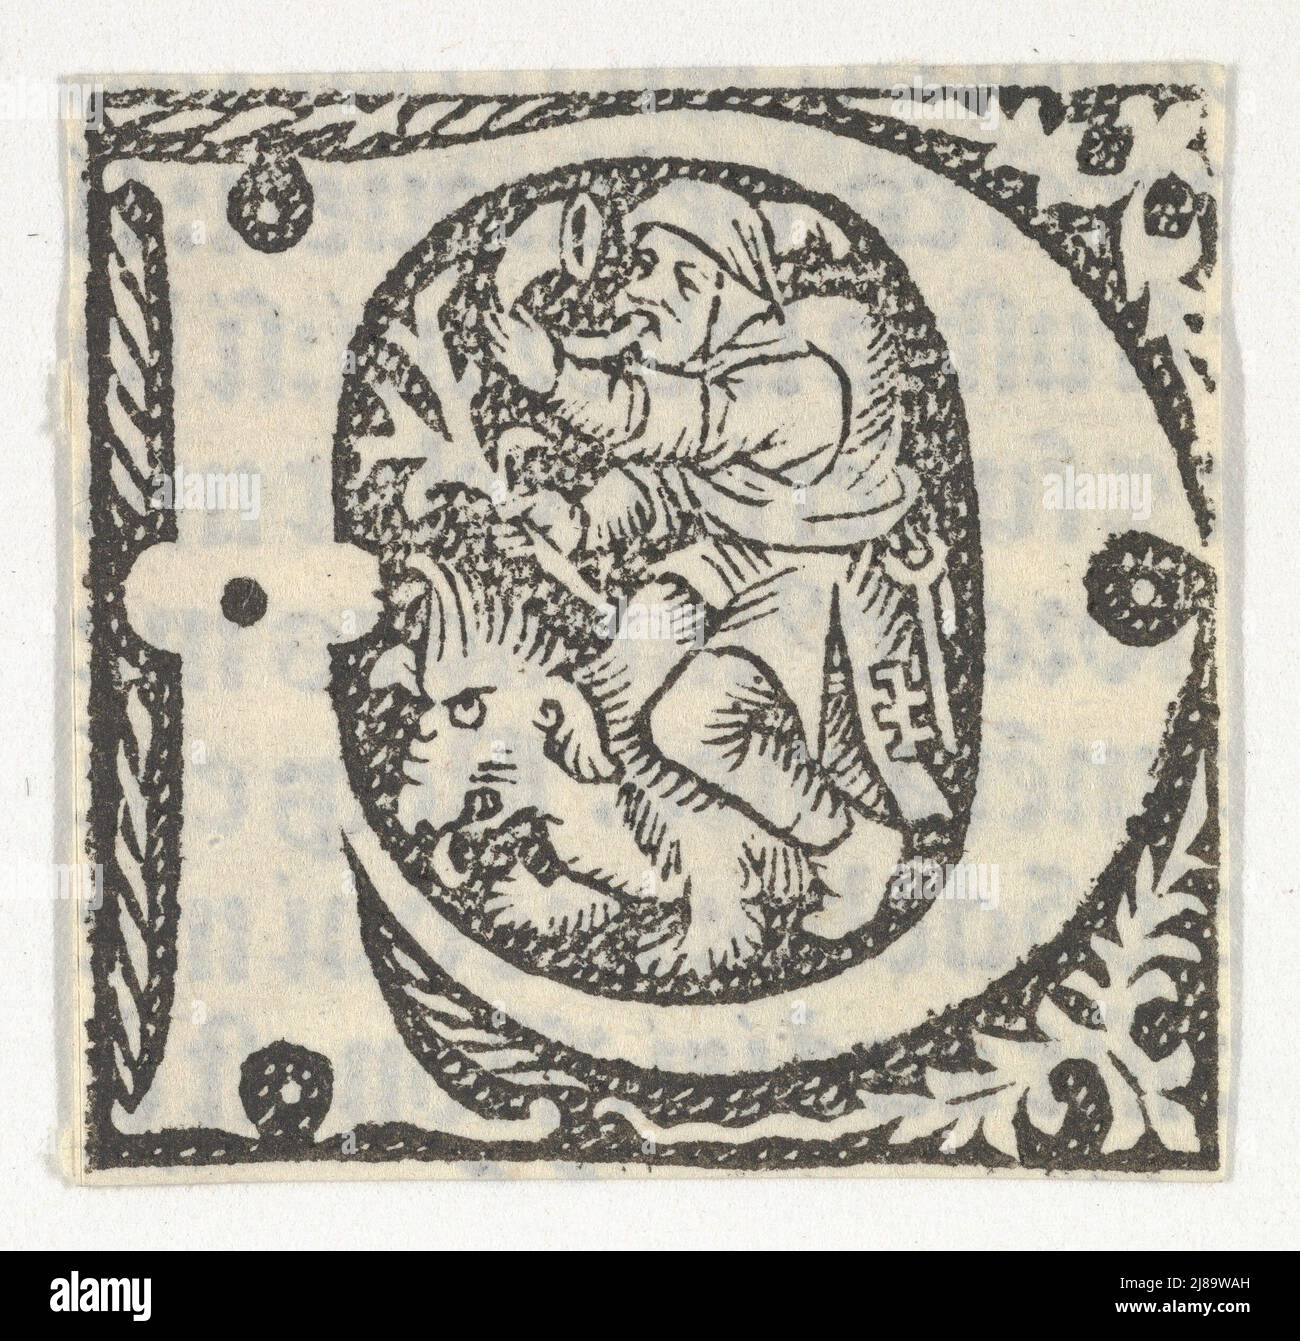 Decorated Roman alphabet, ca. 1499. Stock Photo